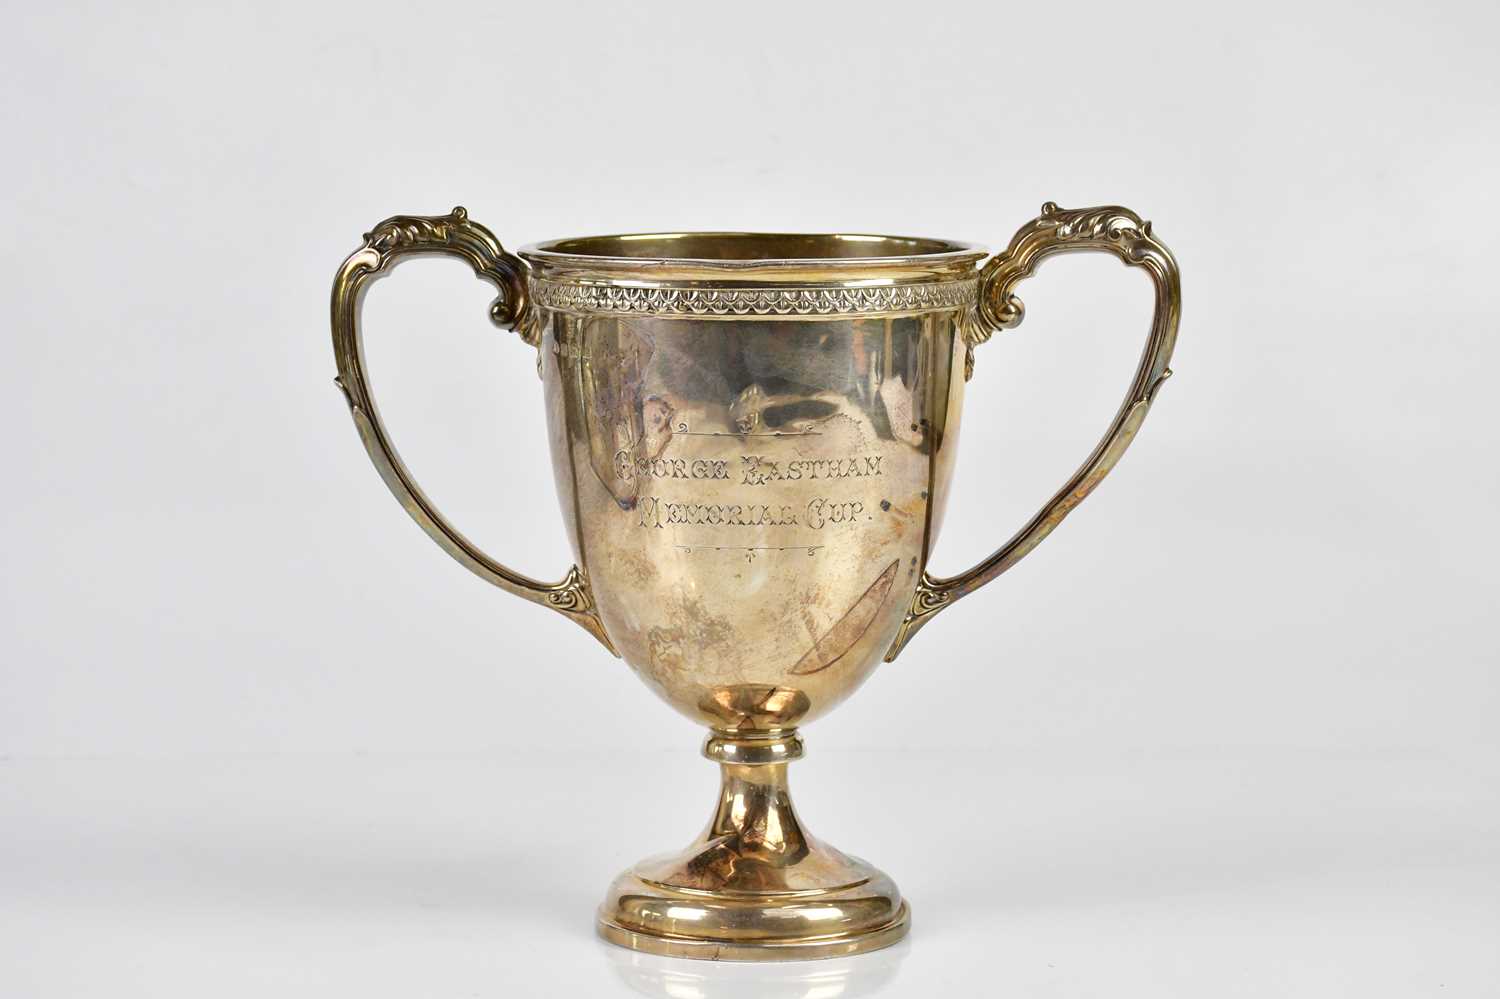 ADIE BROS LTD; a George V hallmarked silver twin handled pedestal trophy cup, inscribed 'George